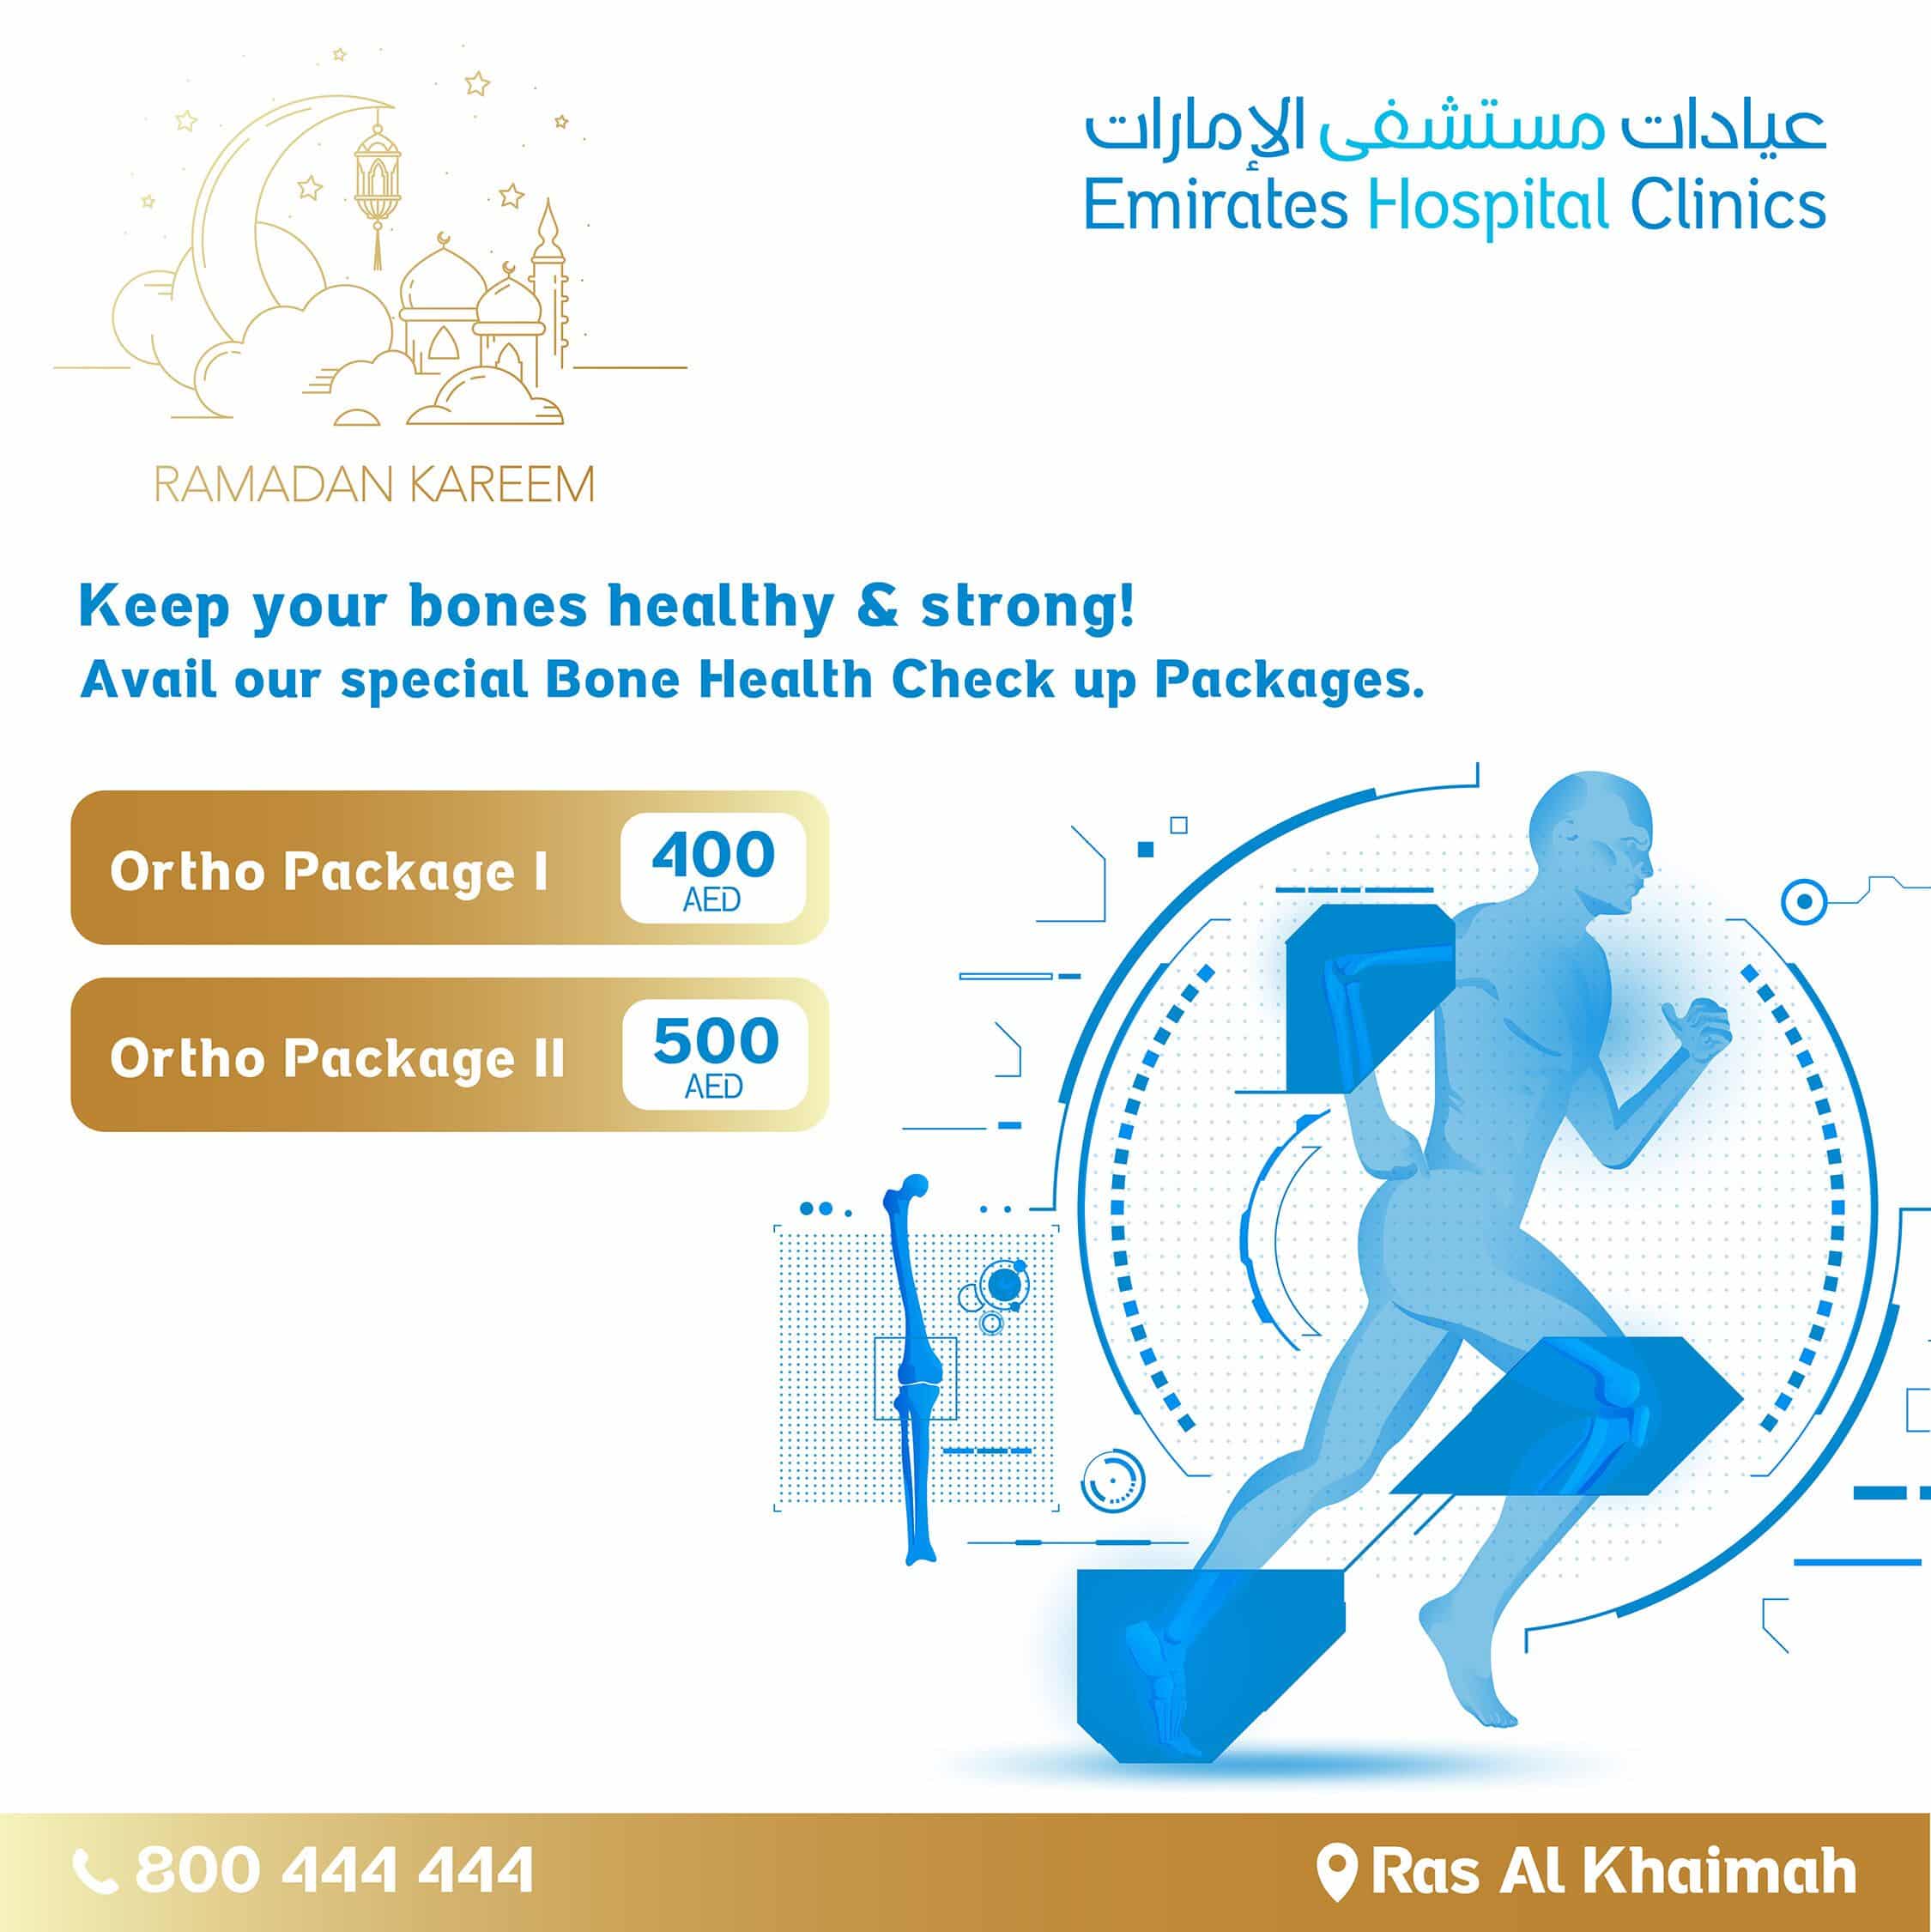 Orthopaedic Health Check-up Packages at Emirates Hospital Clinics - Ras Al Khaimah